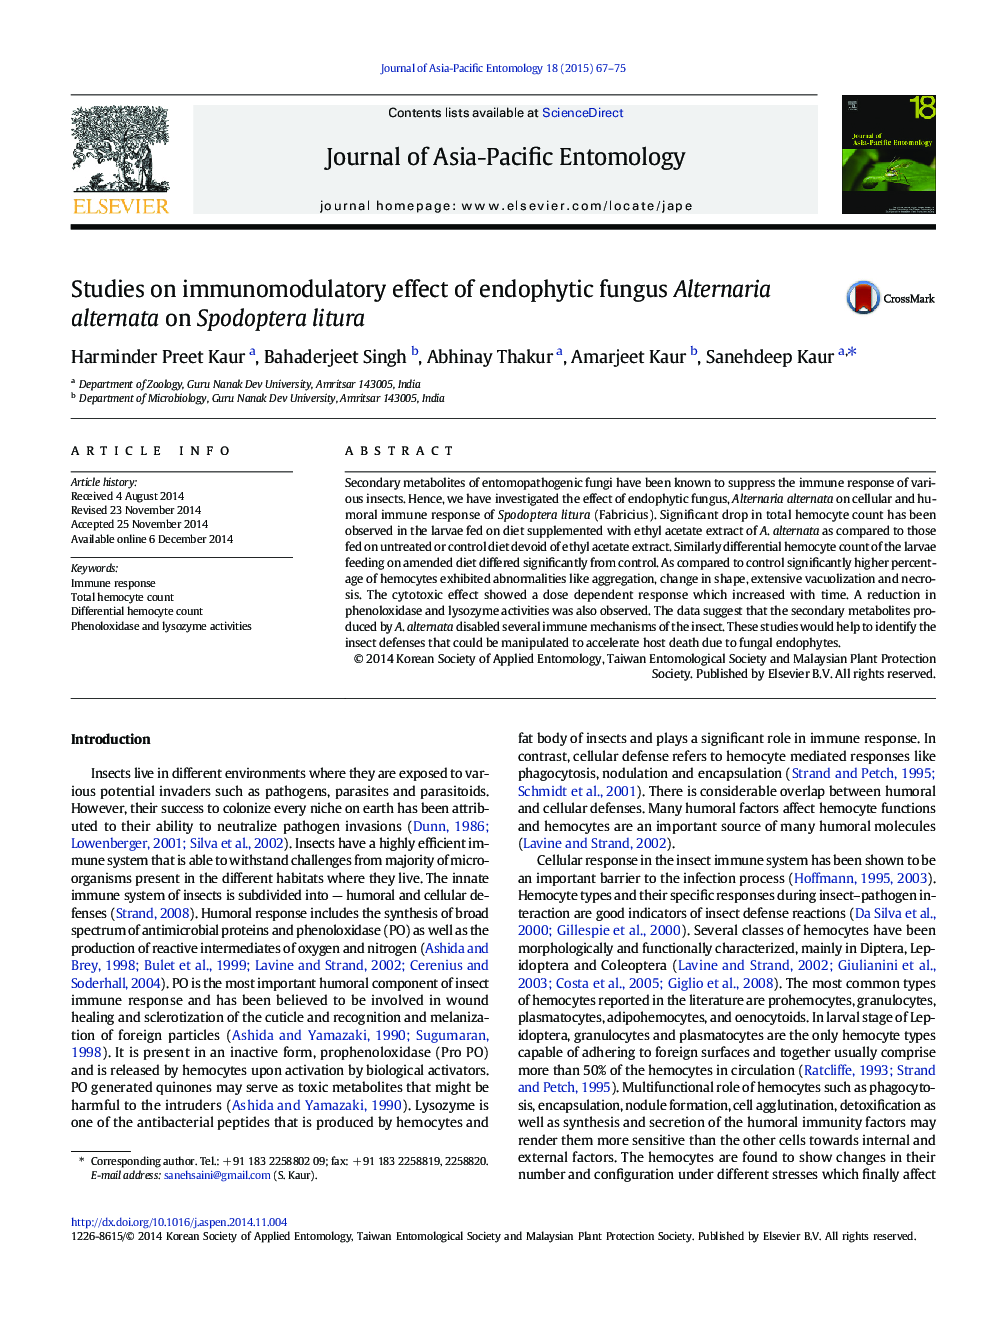 Studies on immunomodulatory effect of endophytic fungus Alternaria alternata on Spodoptera litura